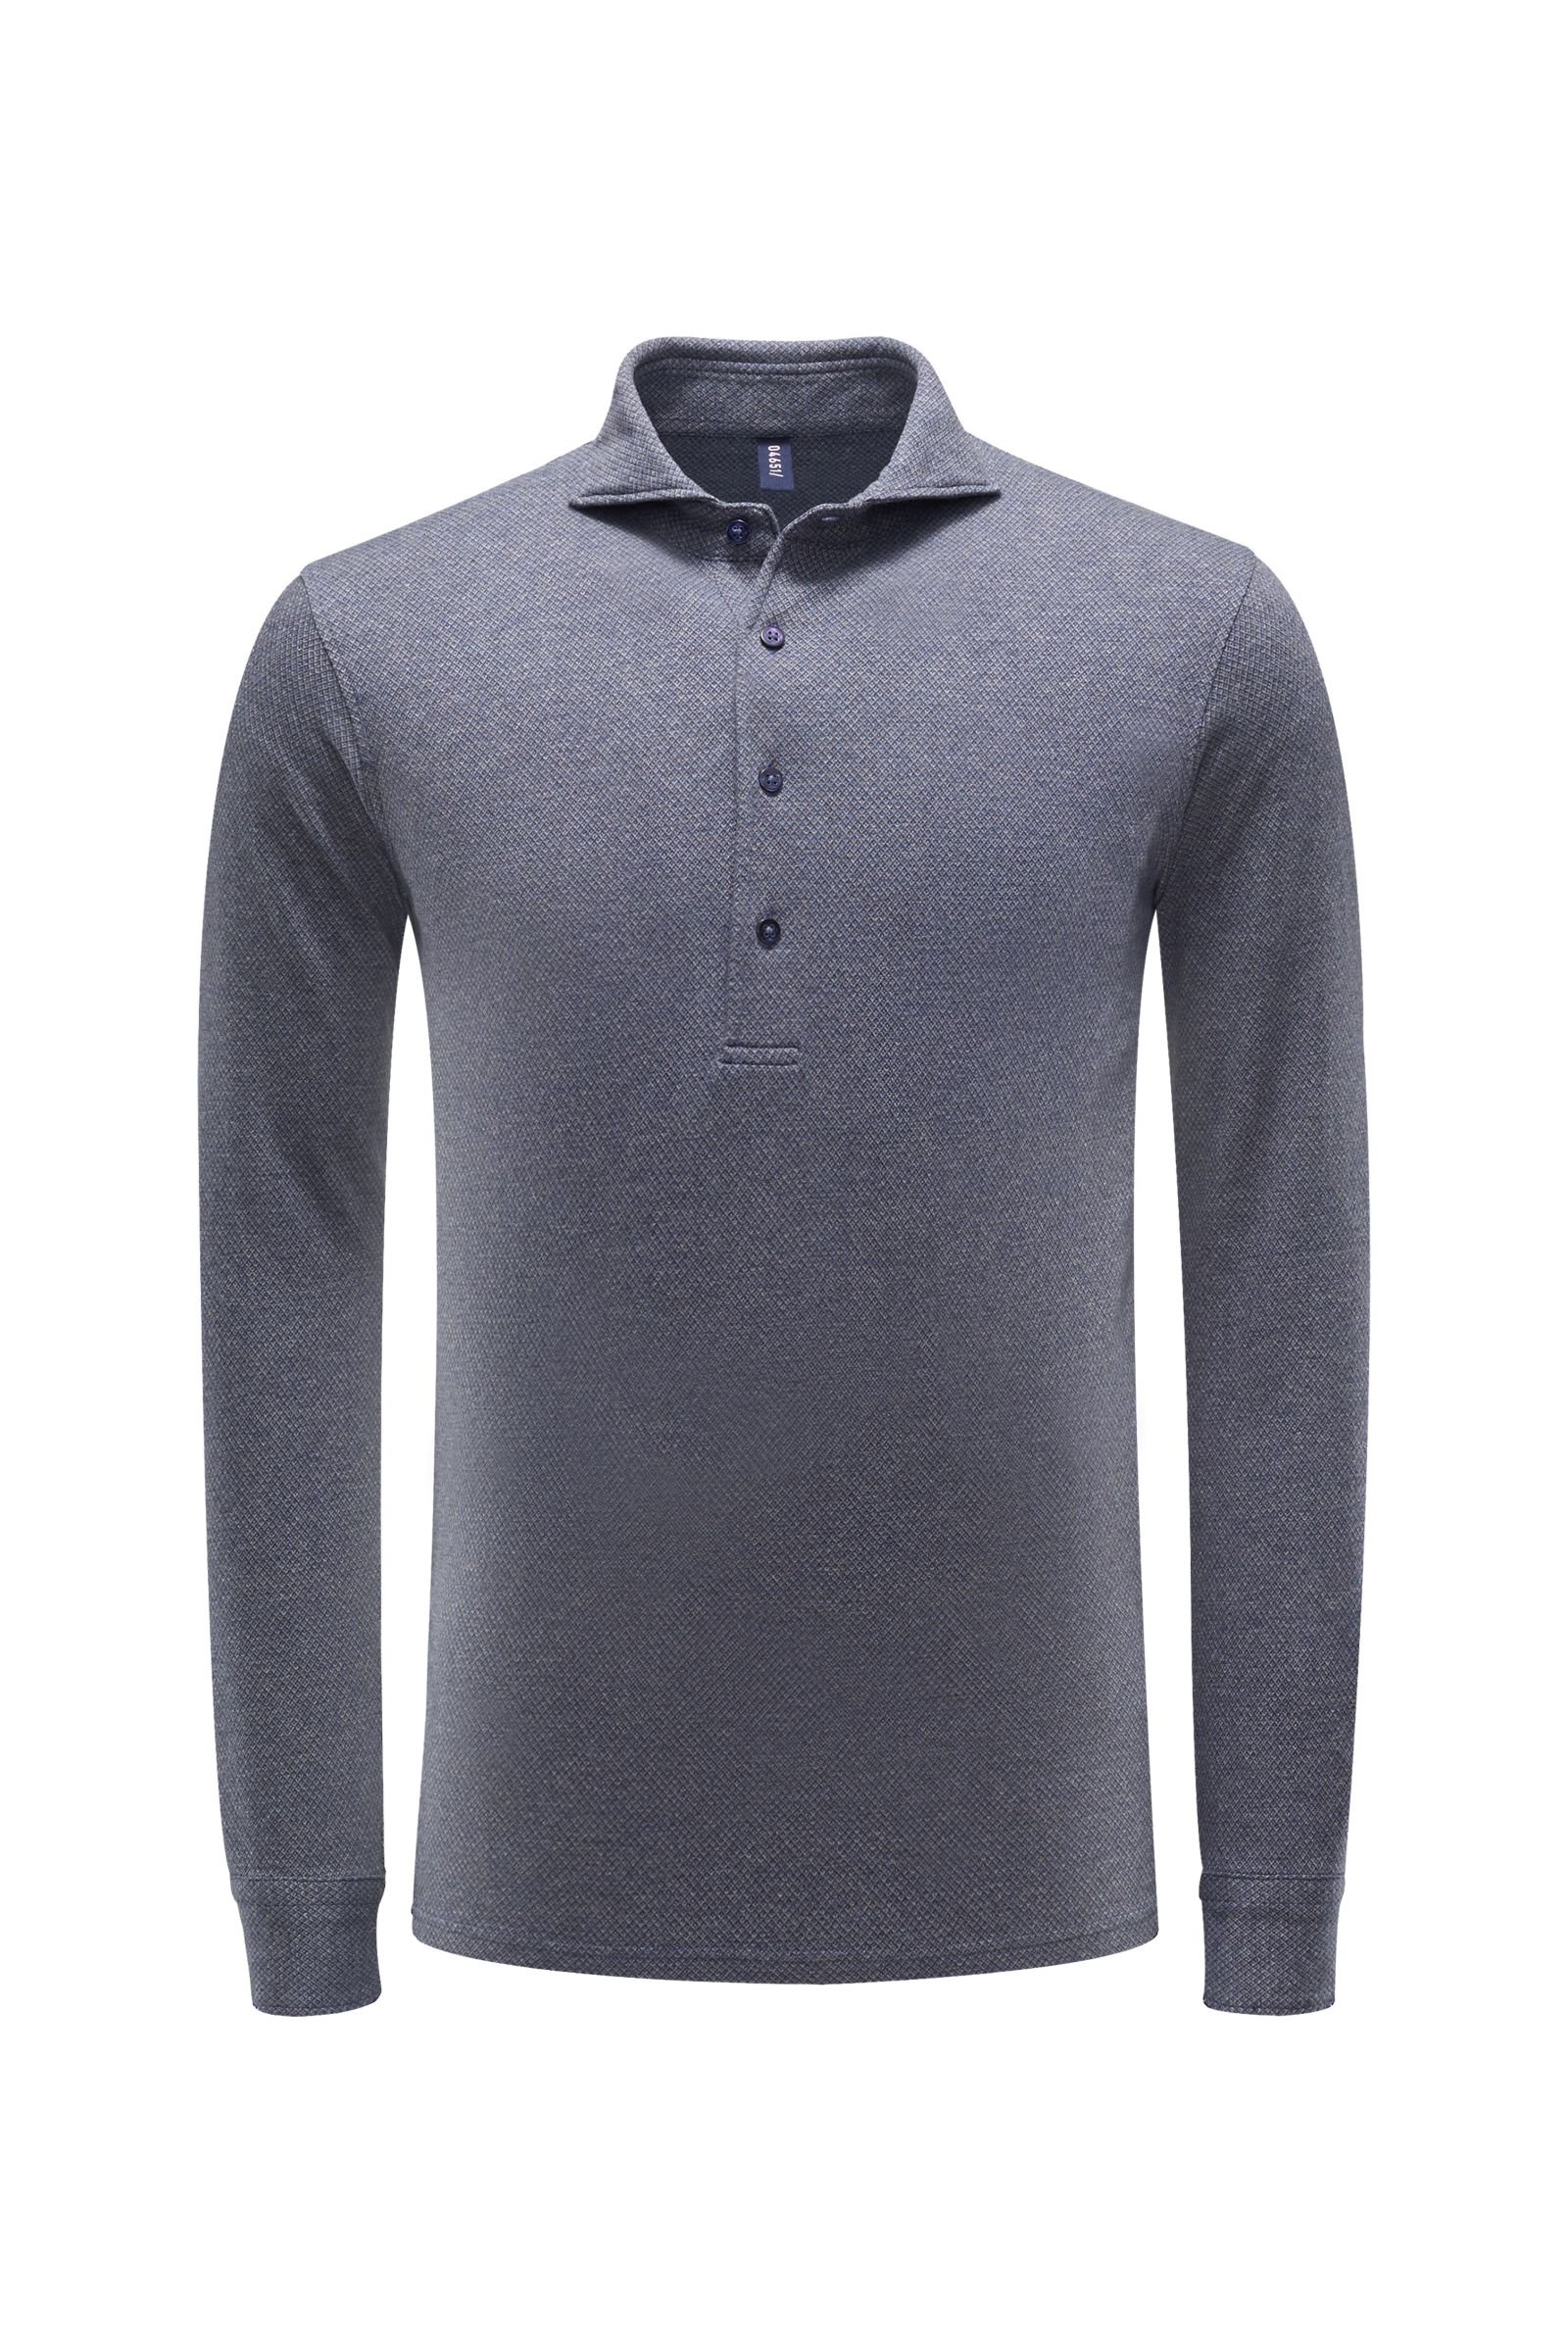 Long sleeve polo shirt grey-blue patterned